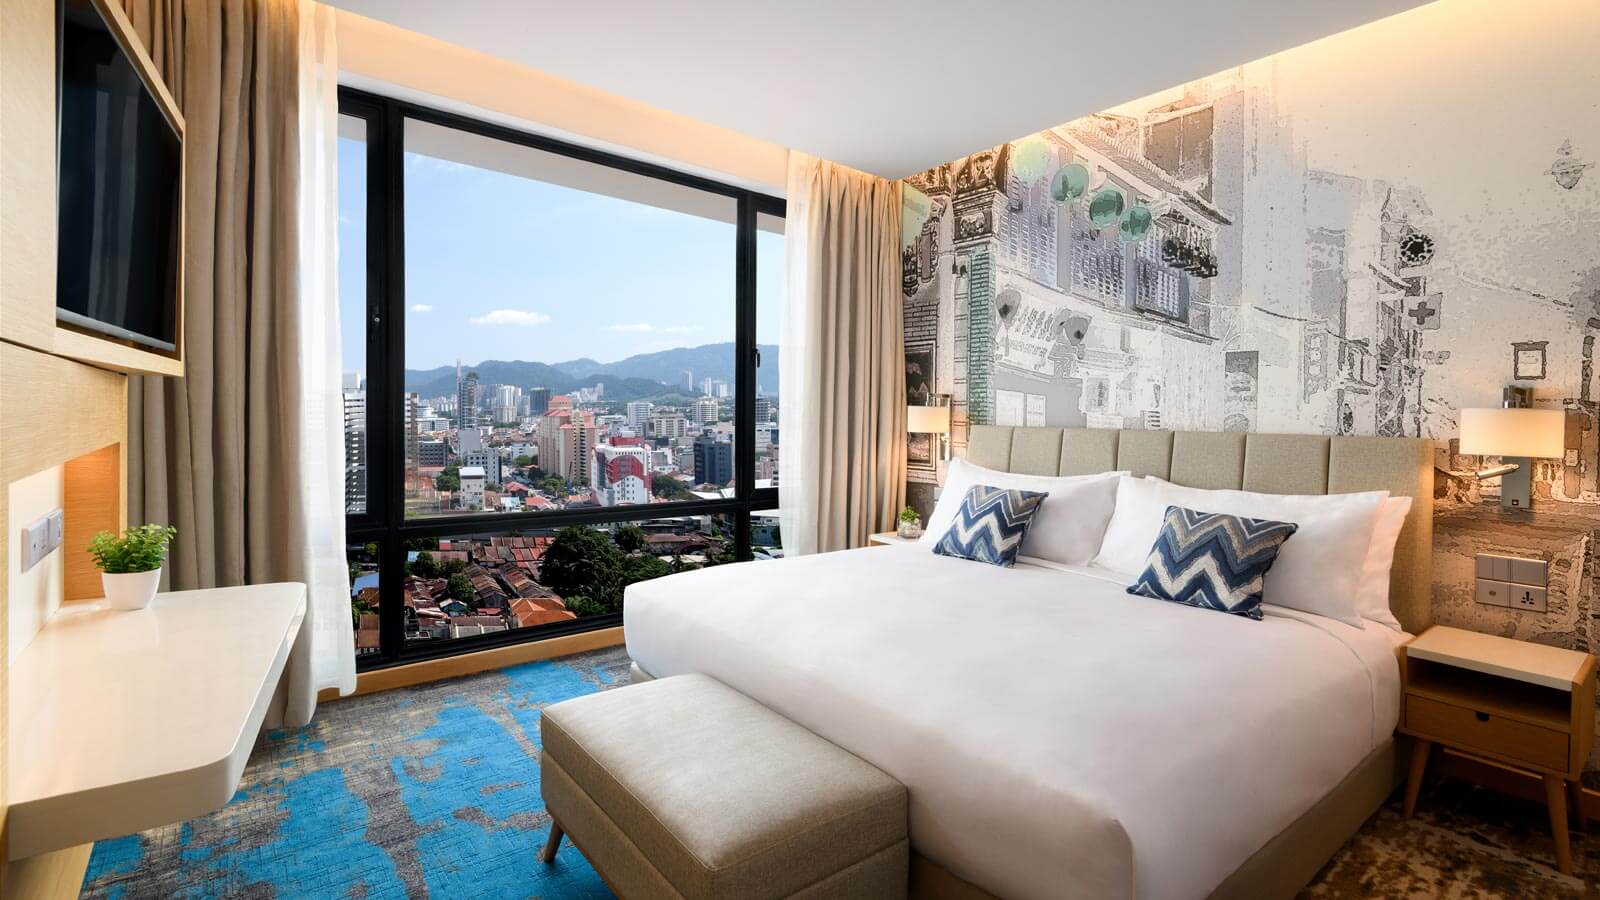 Two Bedroom Suite - OZO George Town Penang